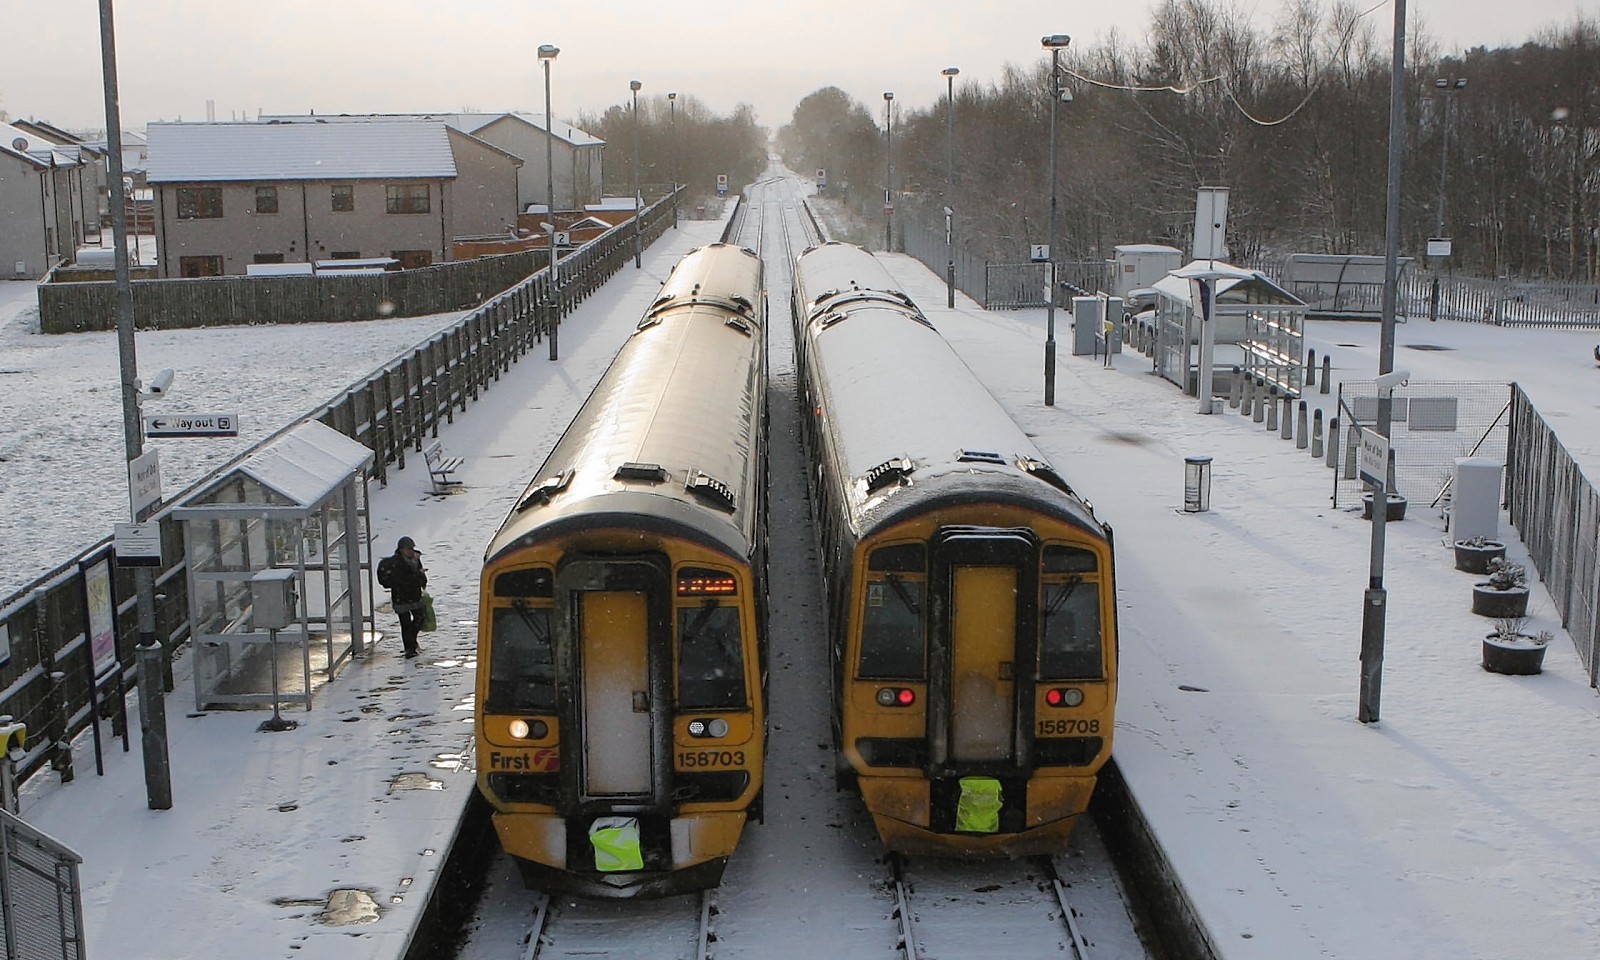 Trains make their way through the snow